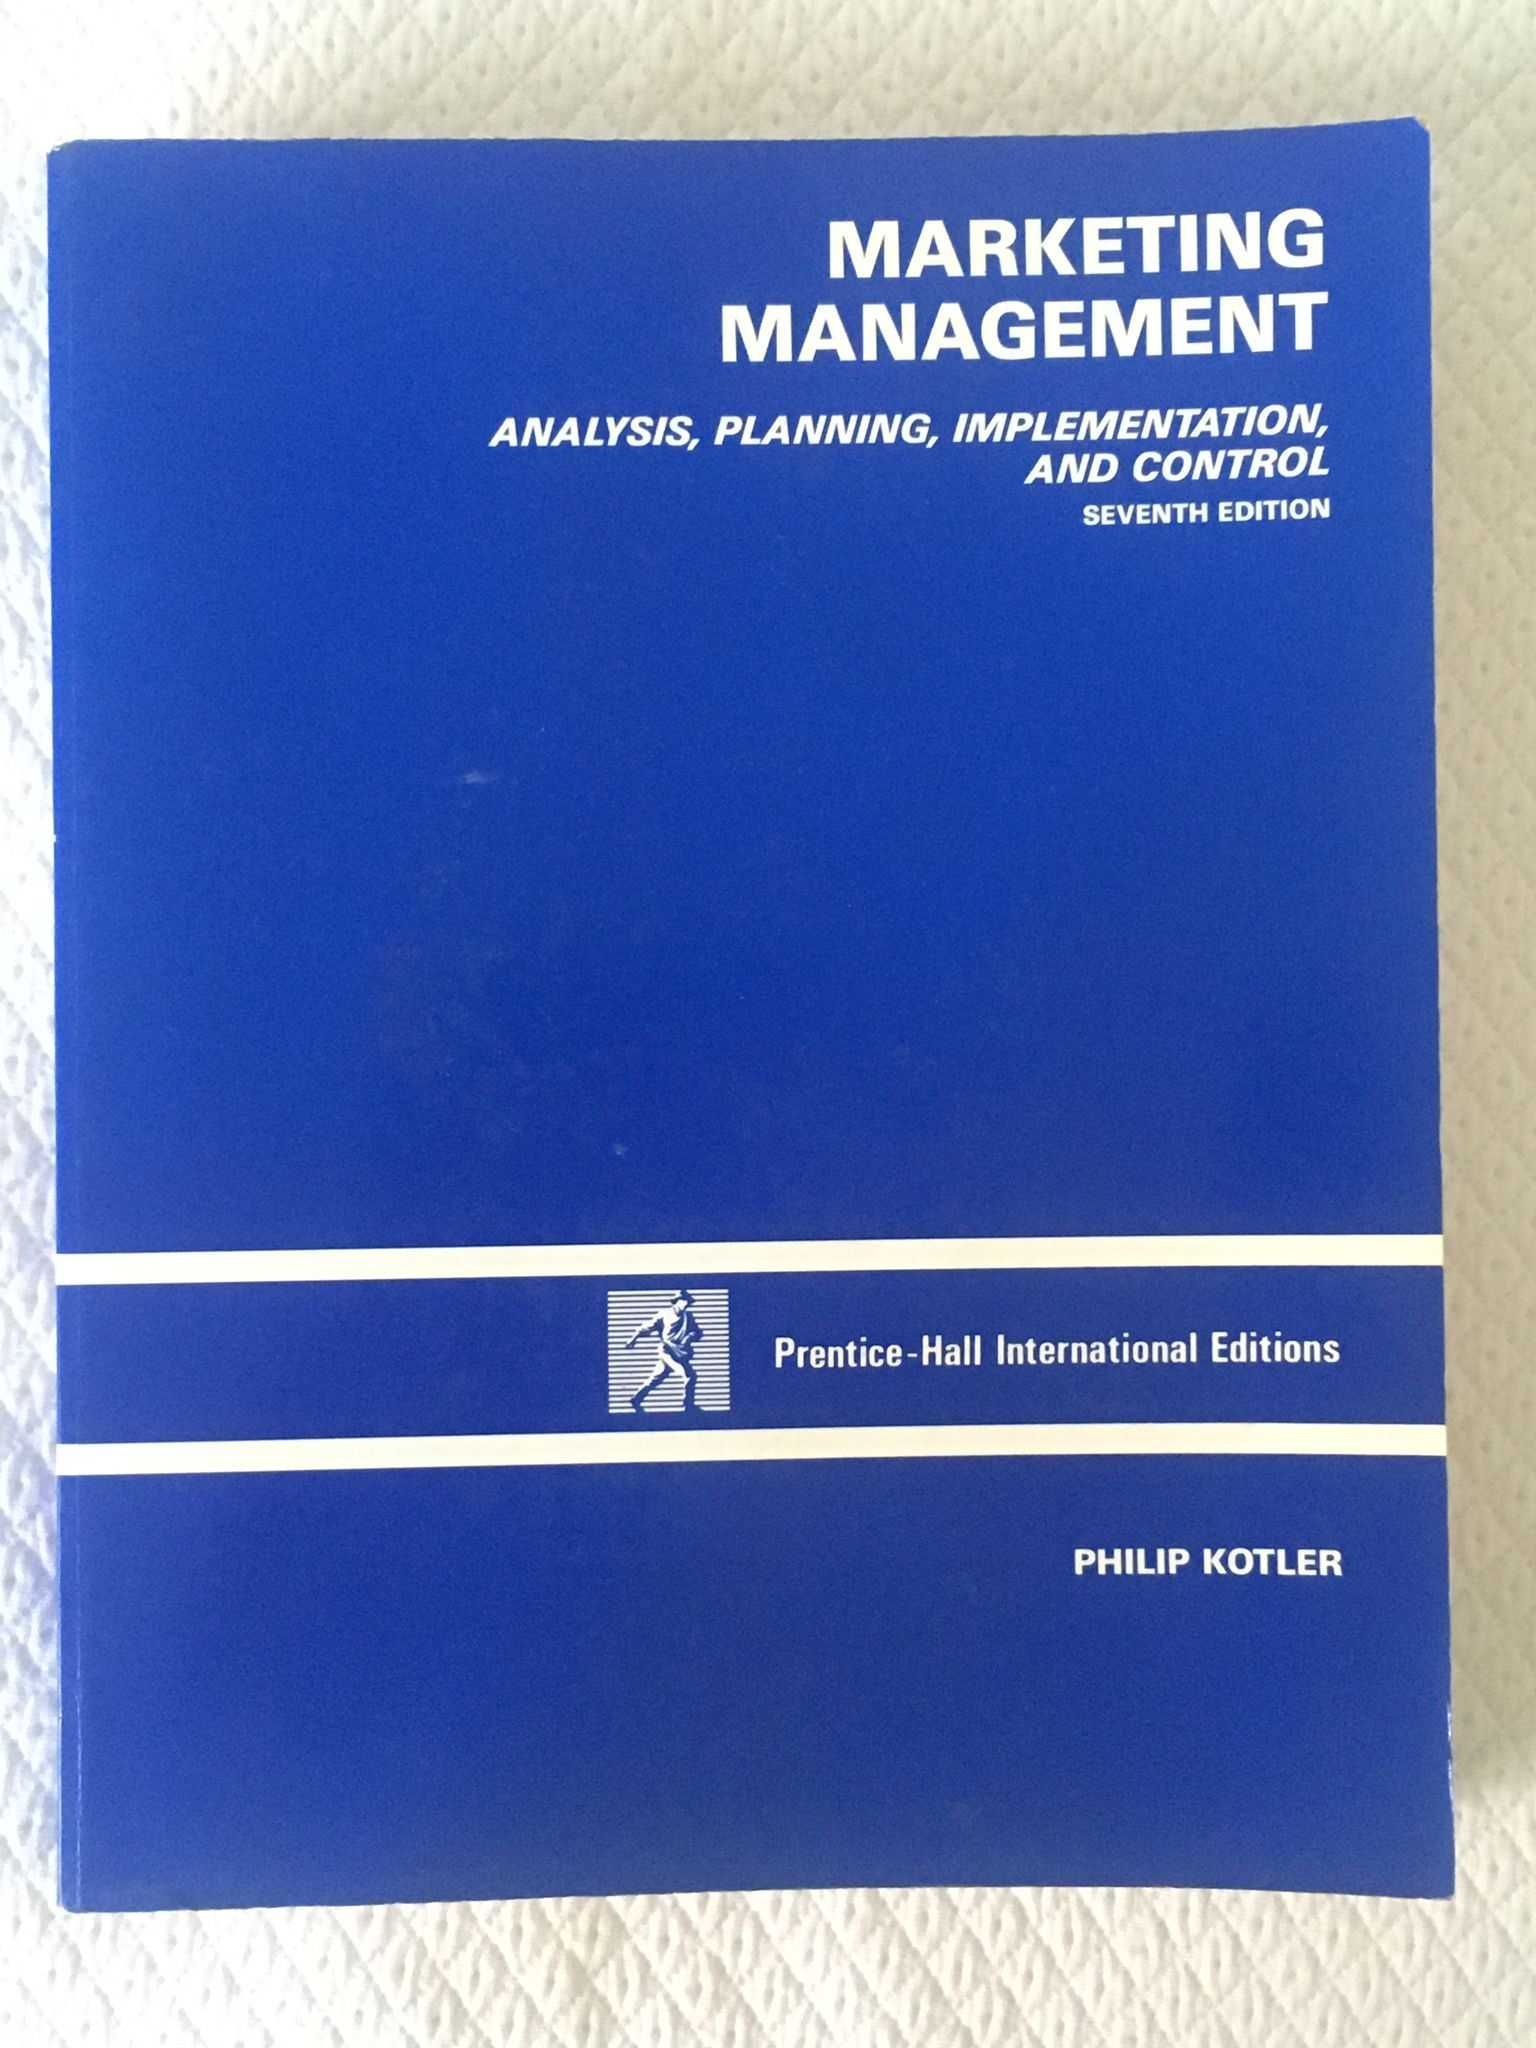 Marketing Management (7th Edition - Philip Kotler)